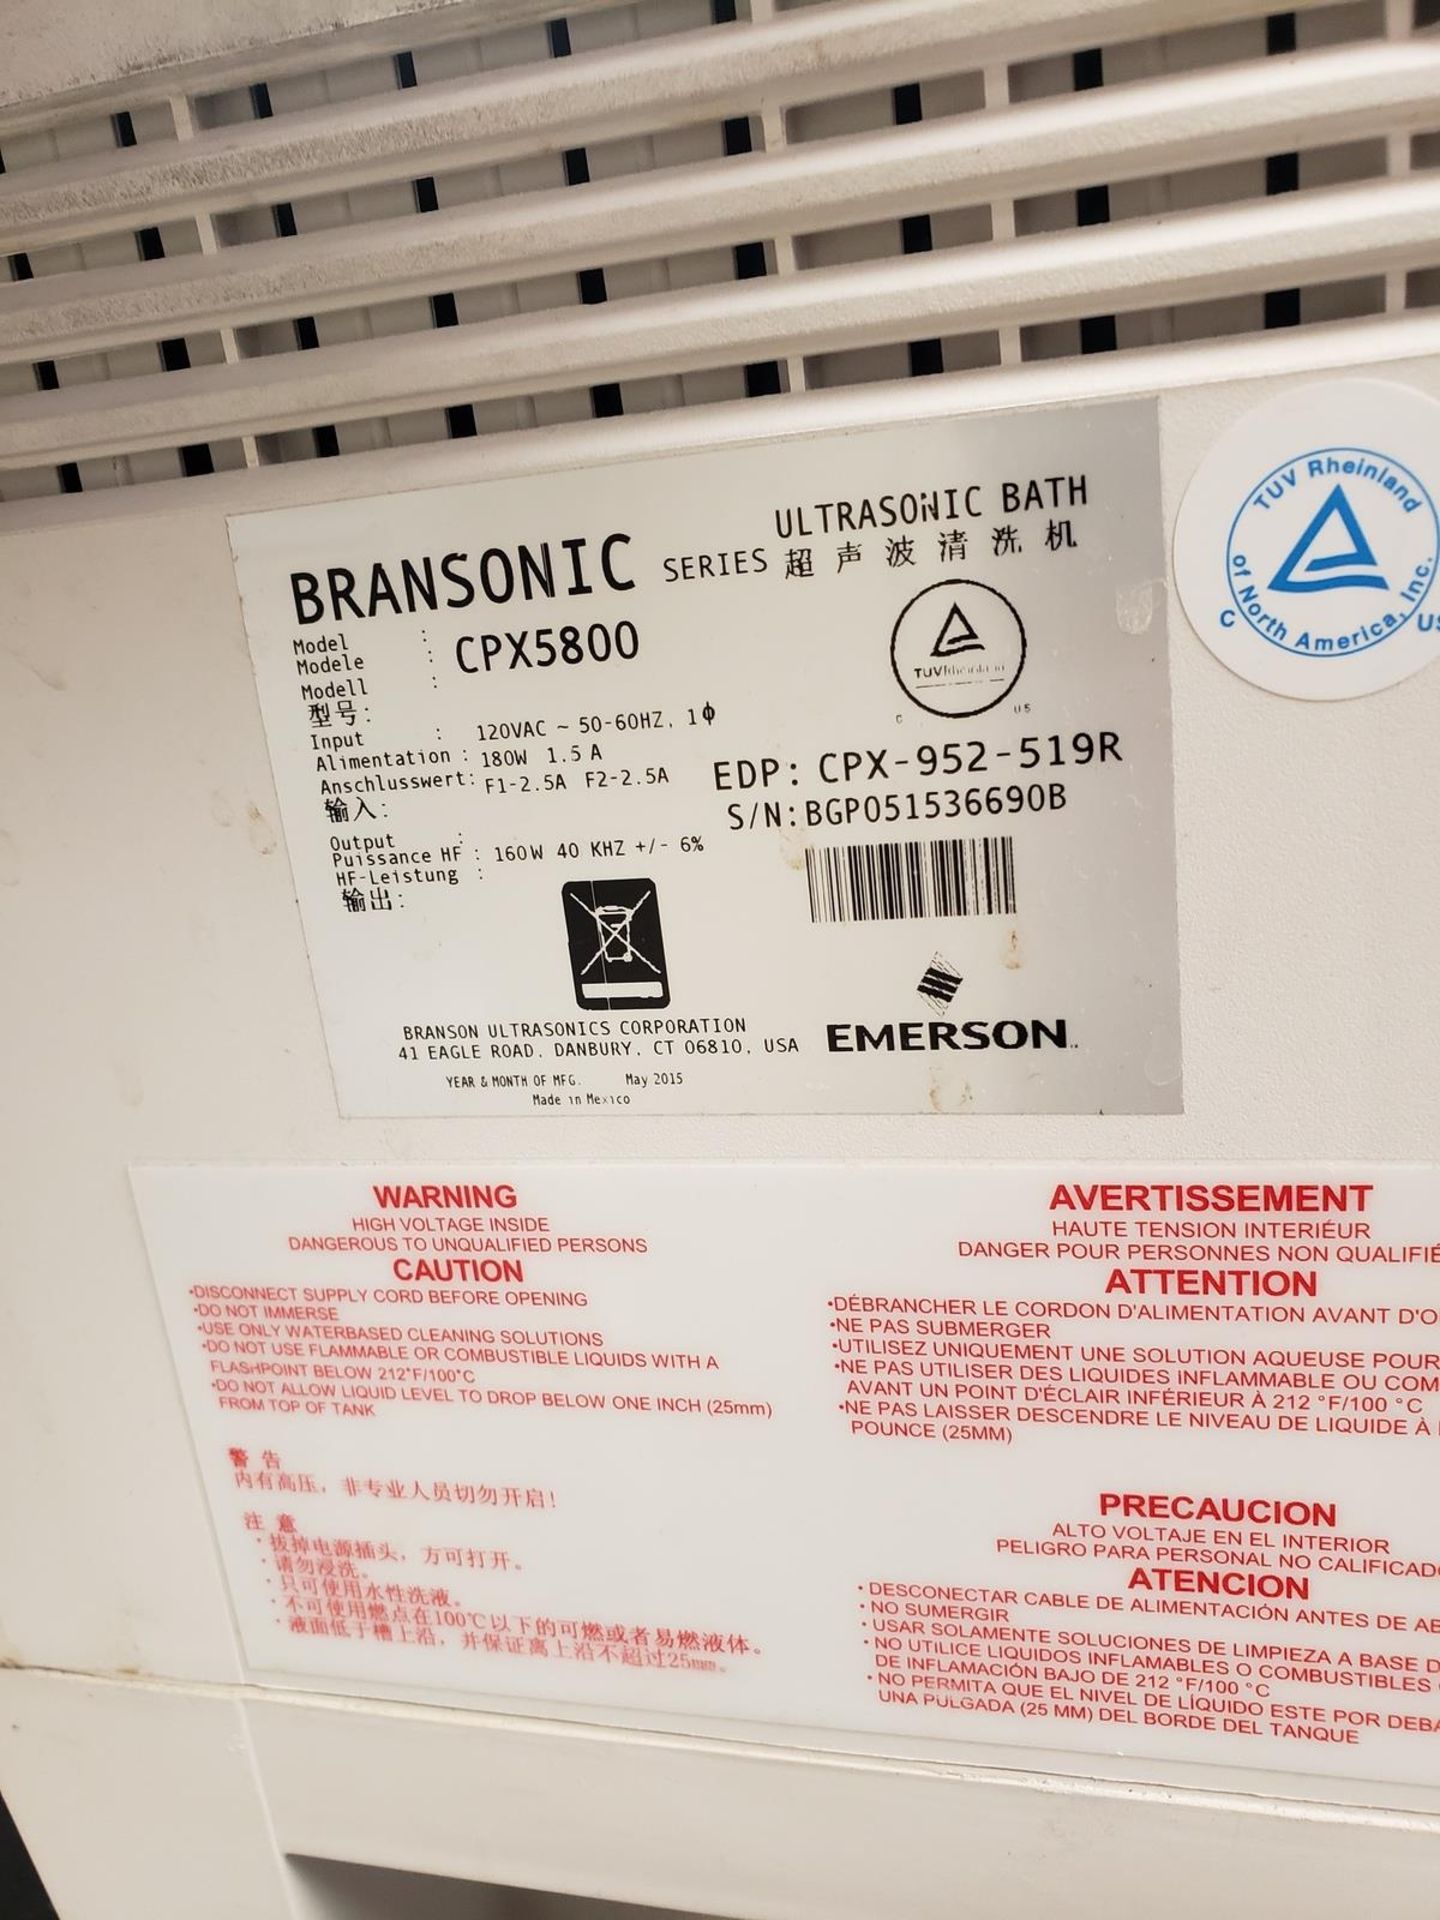 Branson Ultrasonic Bath, M# CPX5800, S/N BGP051536690B - Image 2 of 2